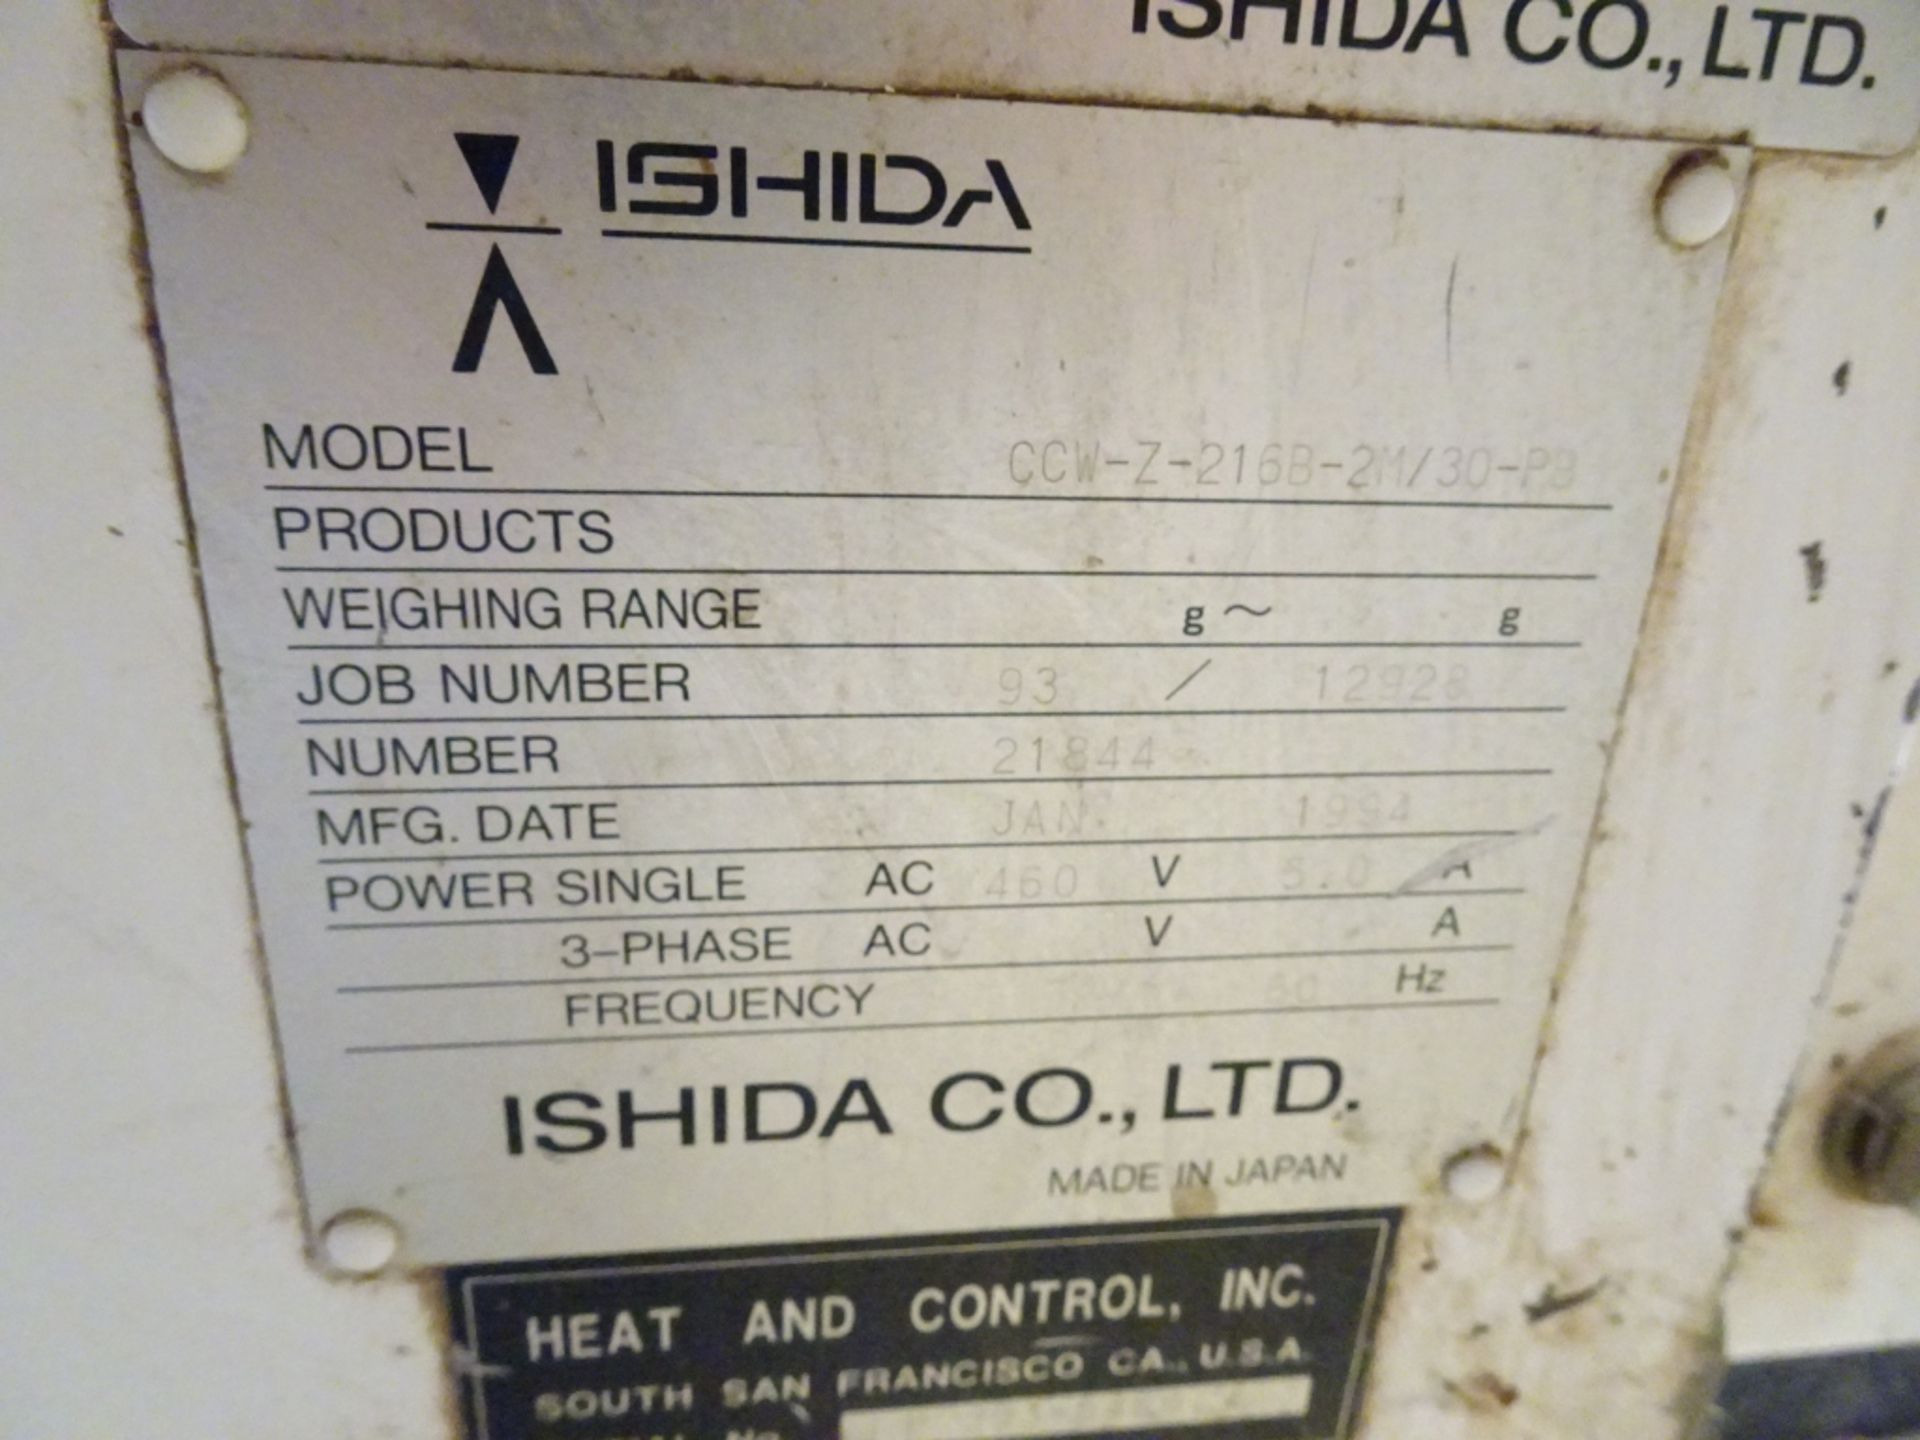 Bosch Form Fill Seal Machine/ Ishida Scale Feed Mettler Metal Detector BULK BID LOTS 1014 TO 1016 - Image 6 of 17